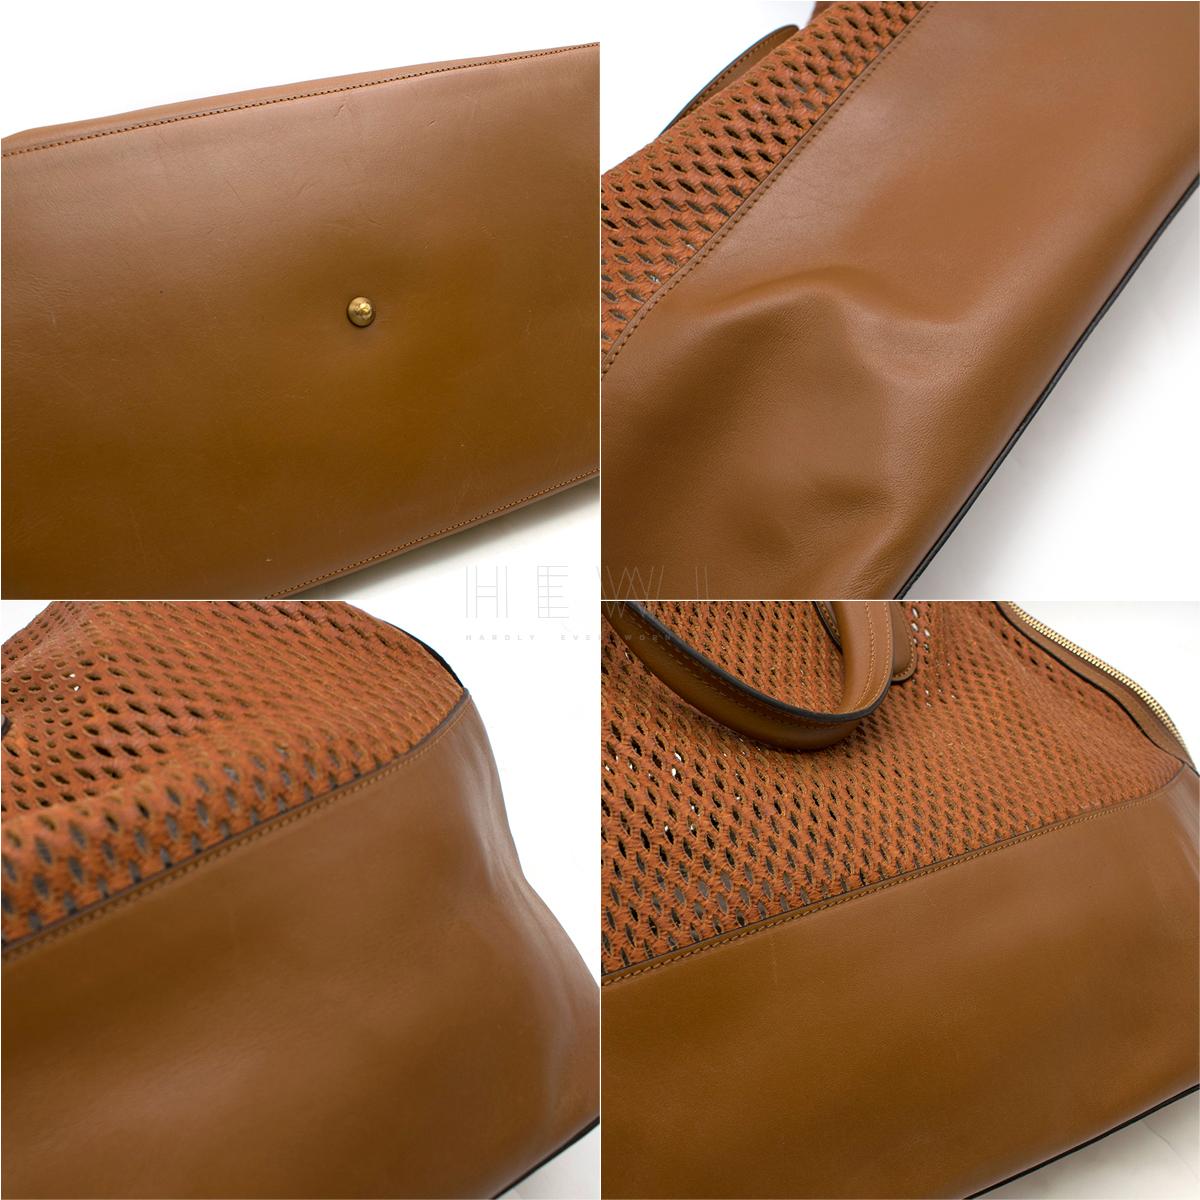 Chloe Laser Cut Leather Tan-Brown Tote Bag SIZE M 1